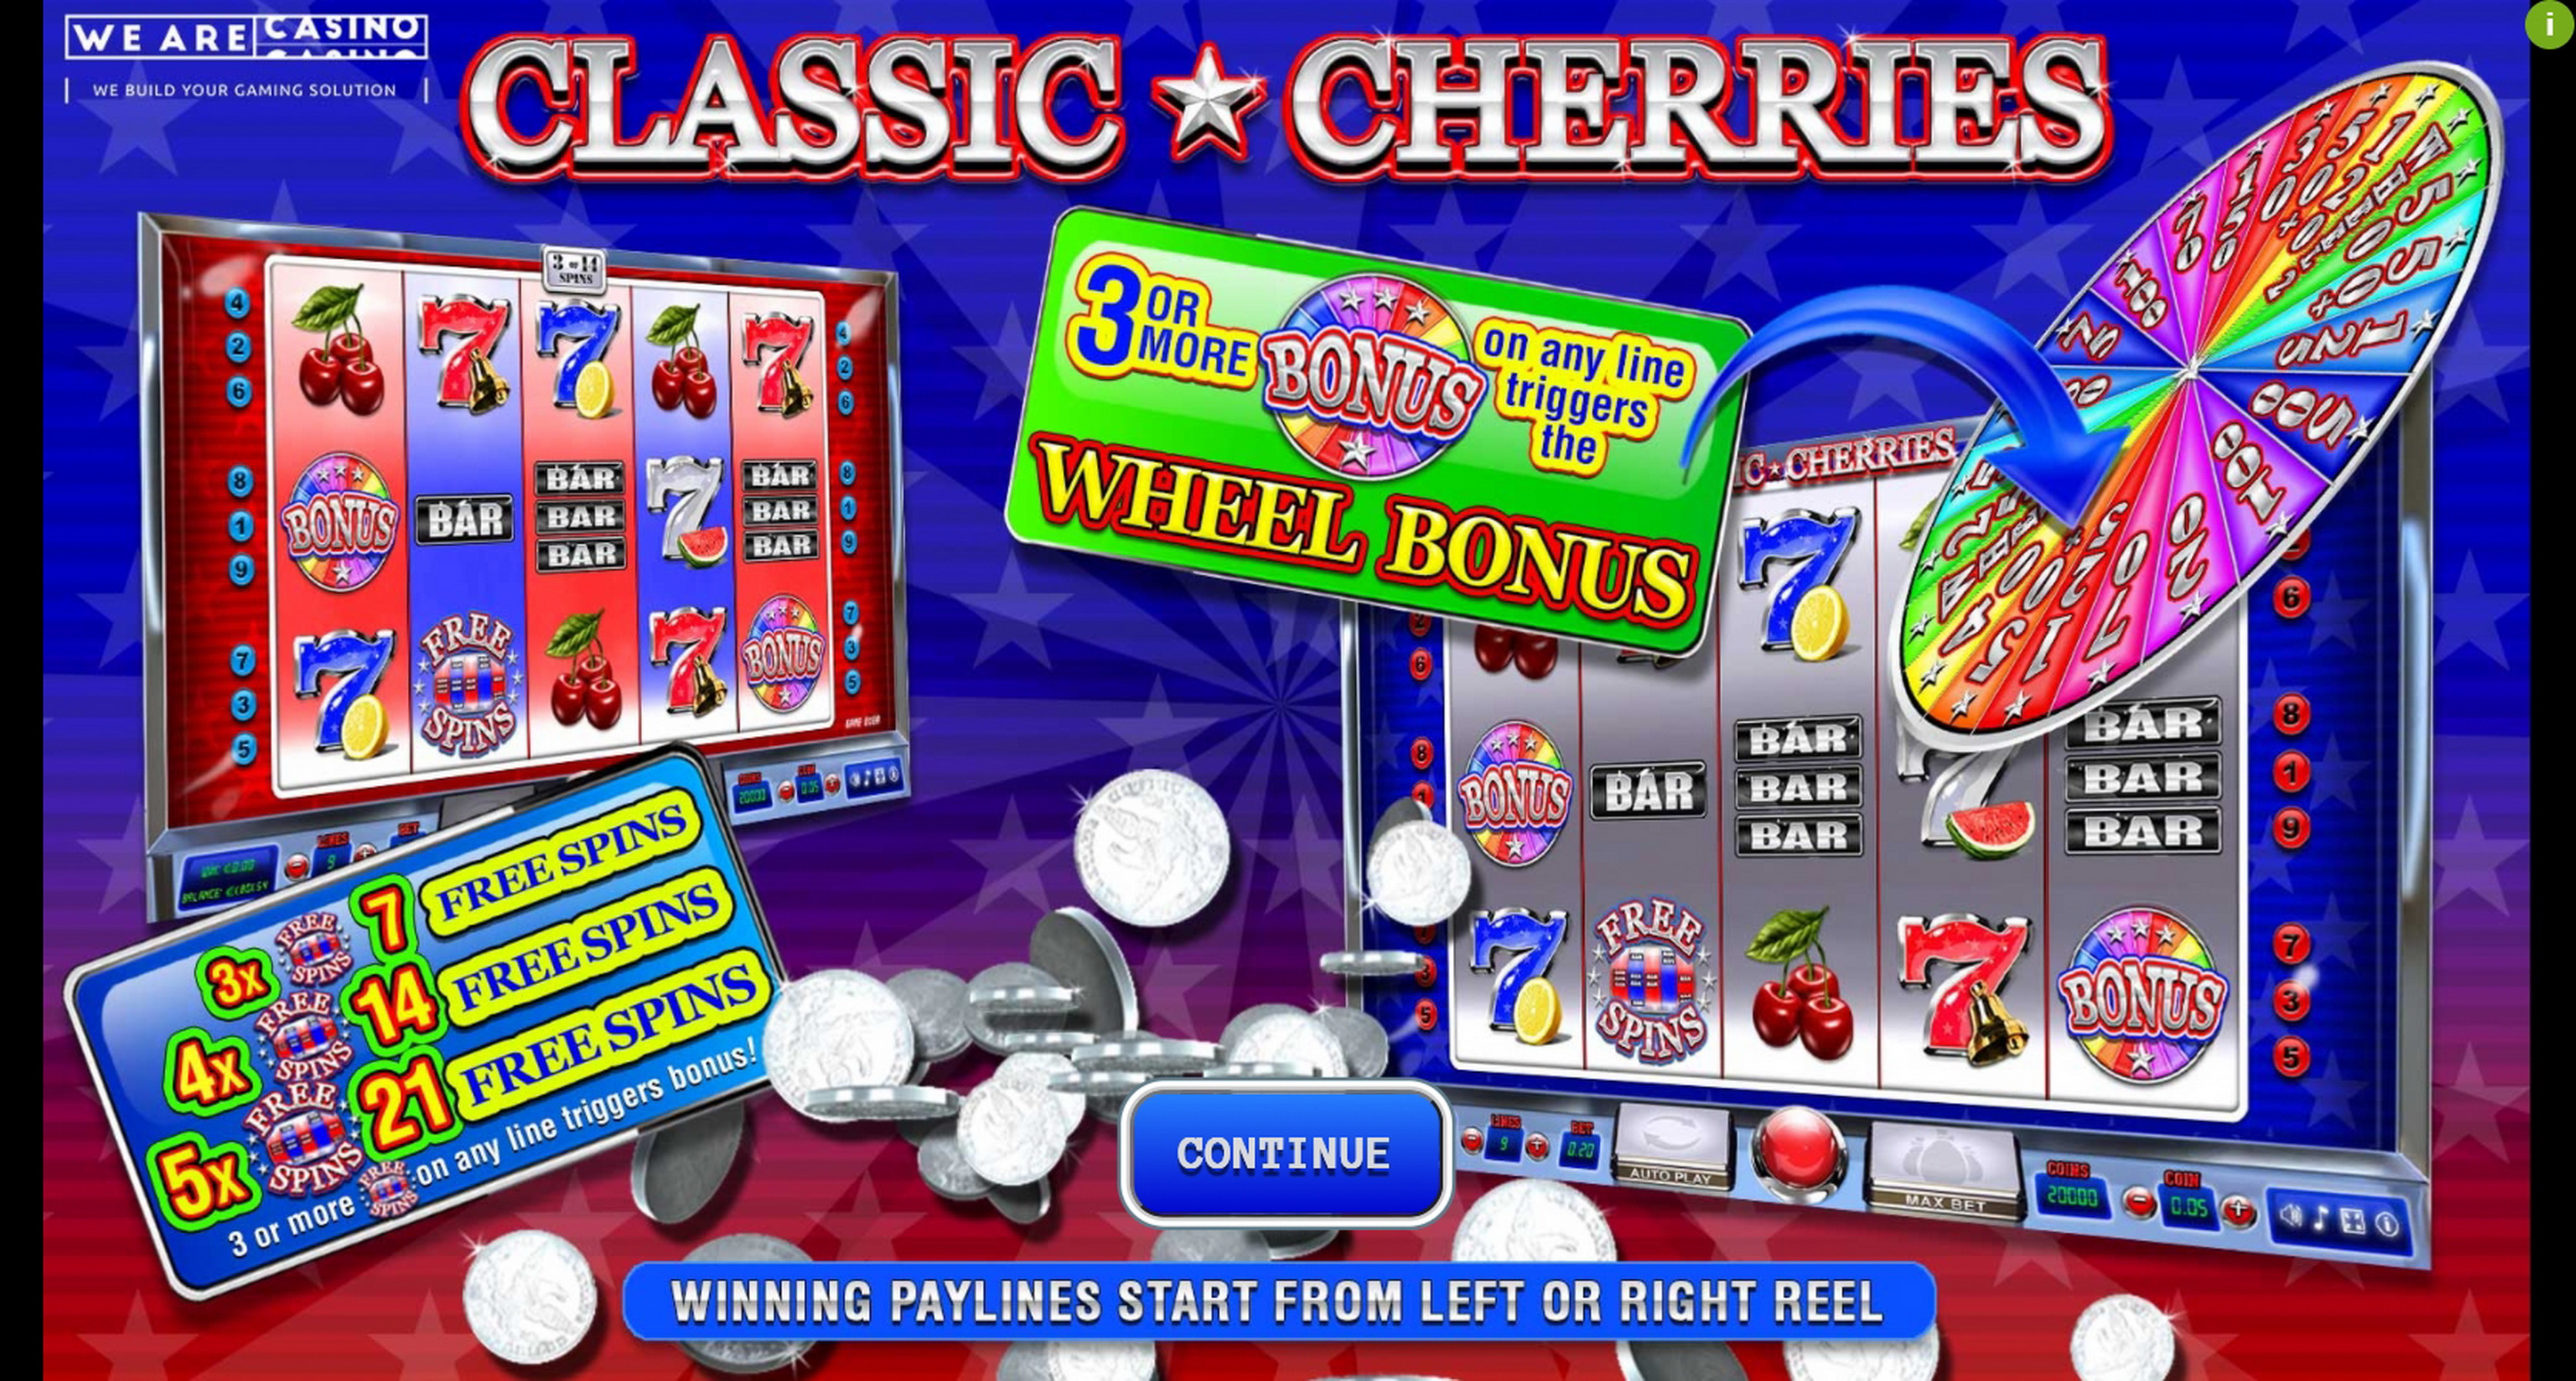 Play Classic Cherries Free Casino Slot Game by We Are Casino